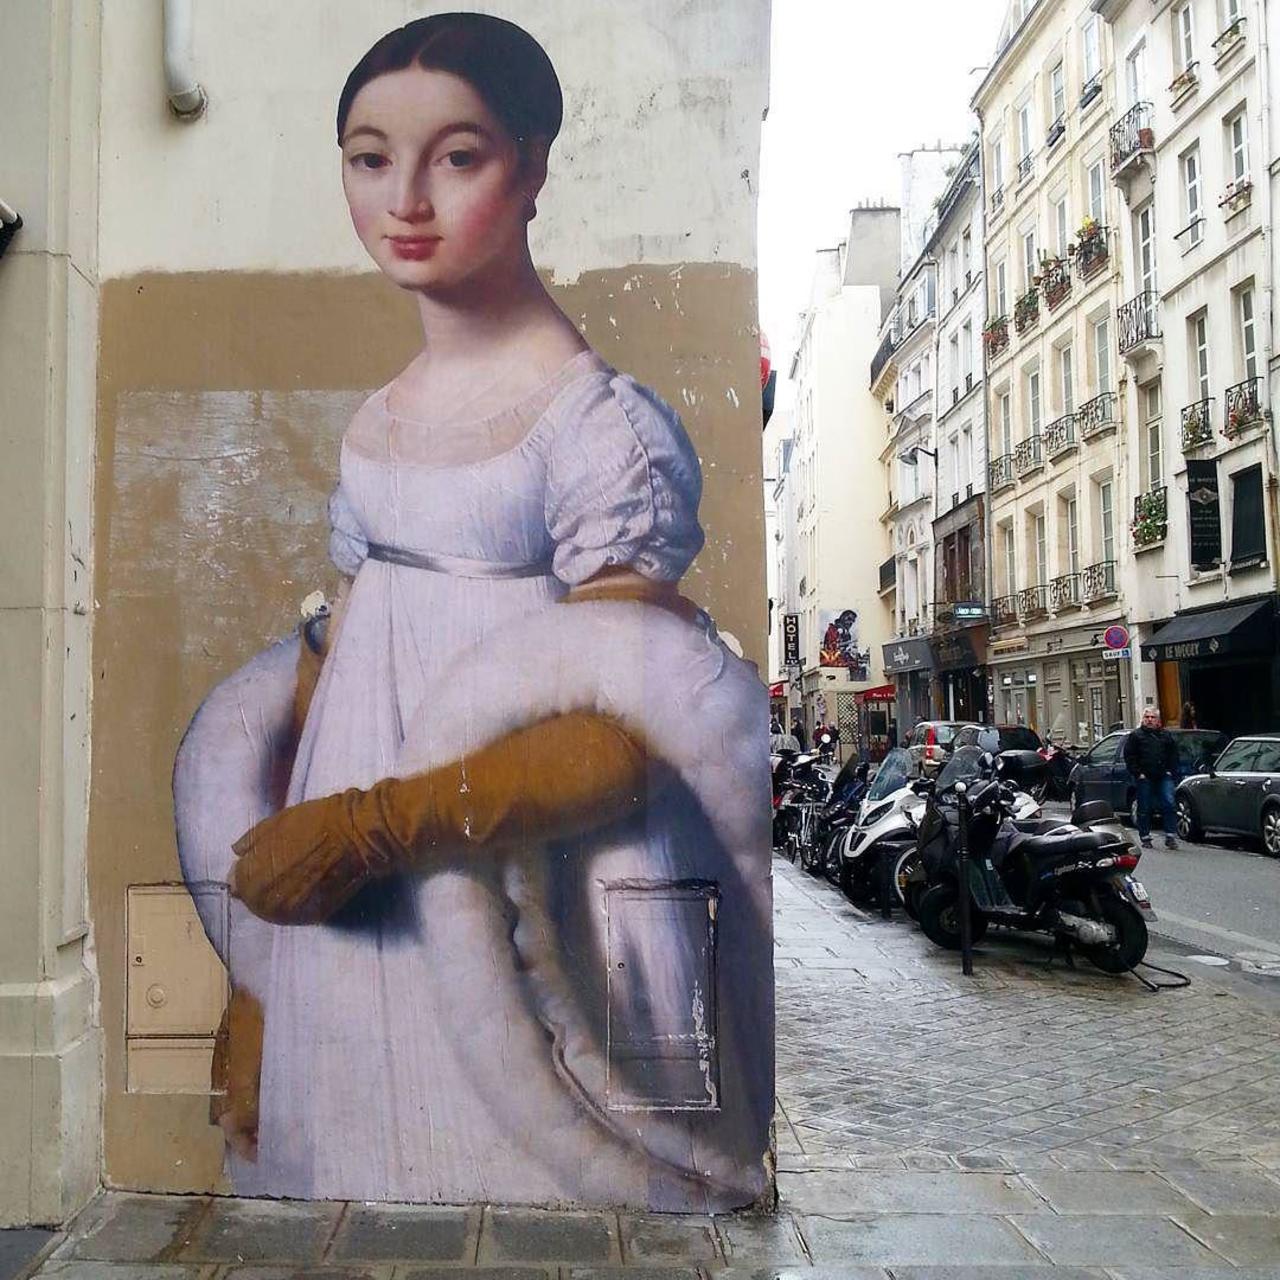 #Paris #graffiti photo by @fotoflaneuse http://ift.tt/1KgSLa8 #StreetArt http://t.co/RDibtQuNQ8